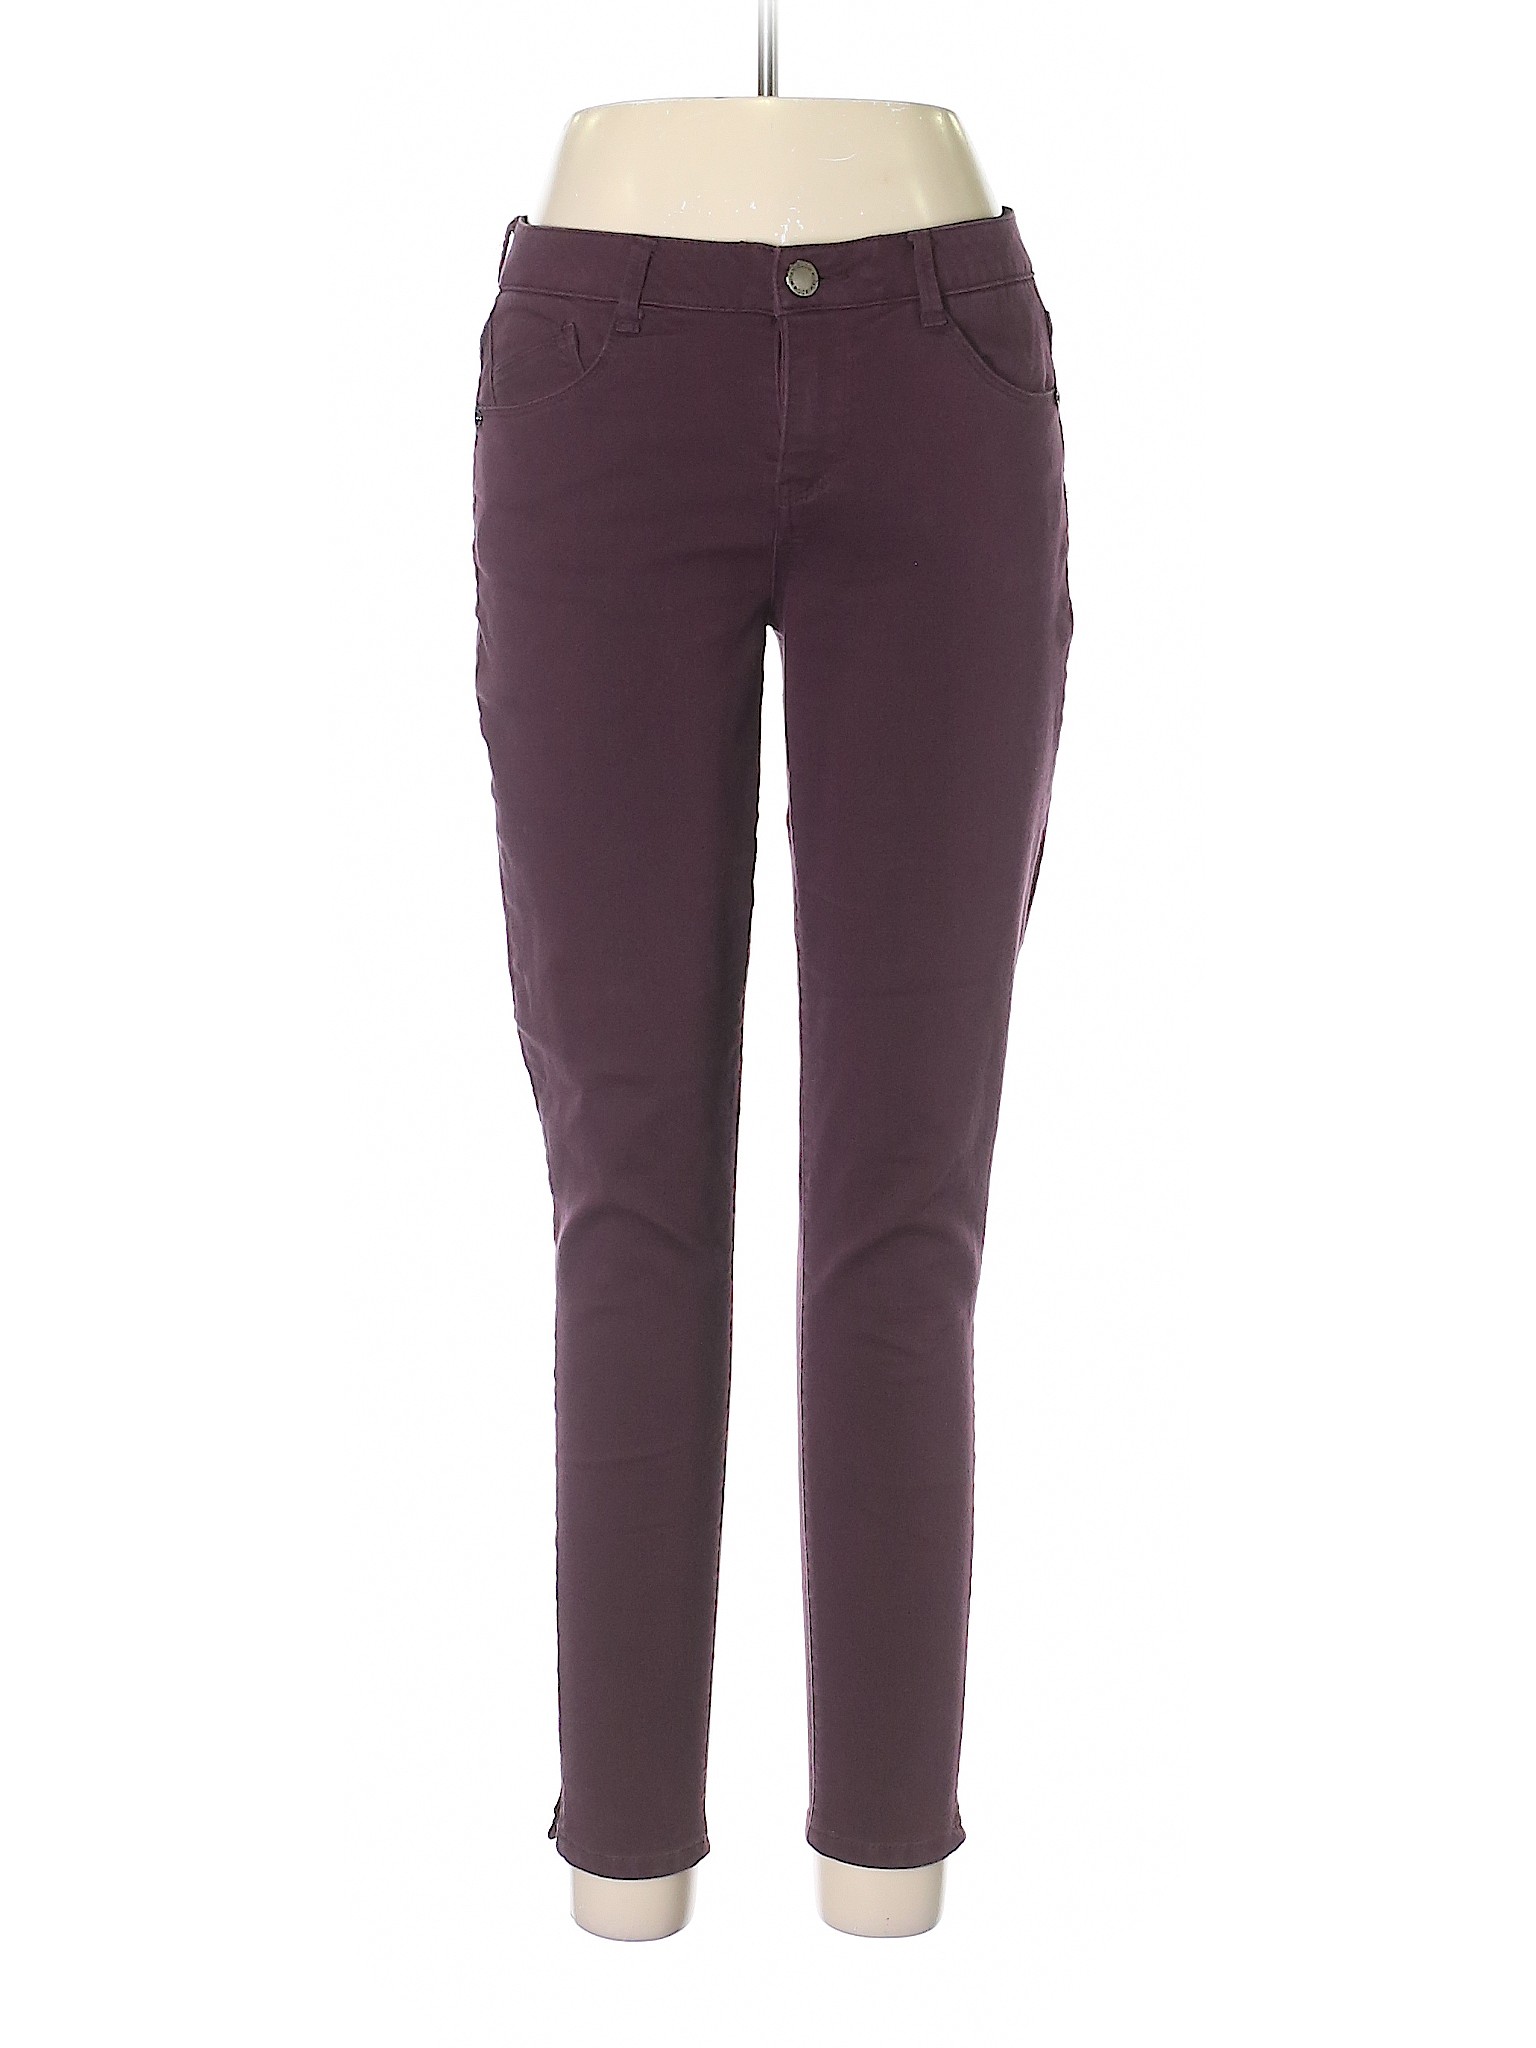 Purple jeans - noredgg